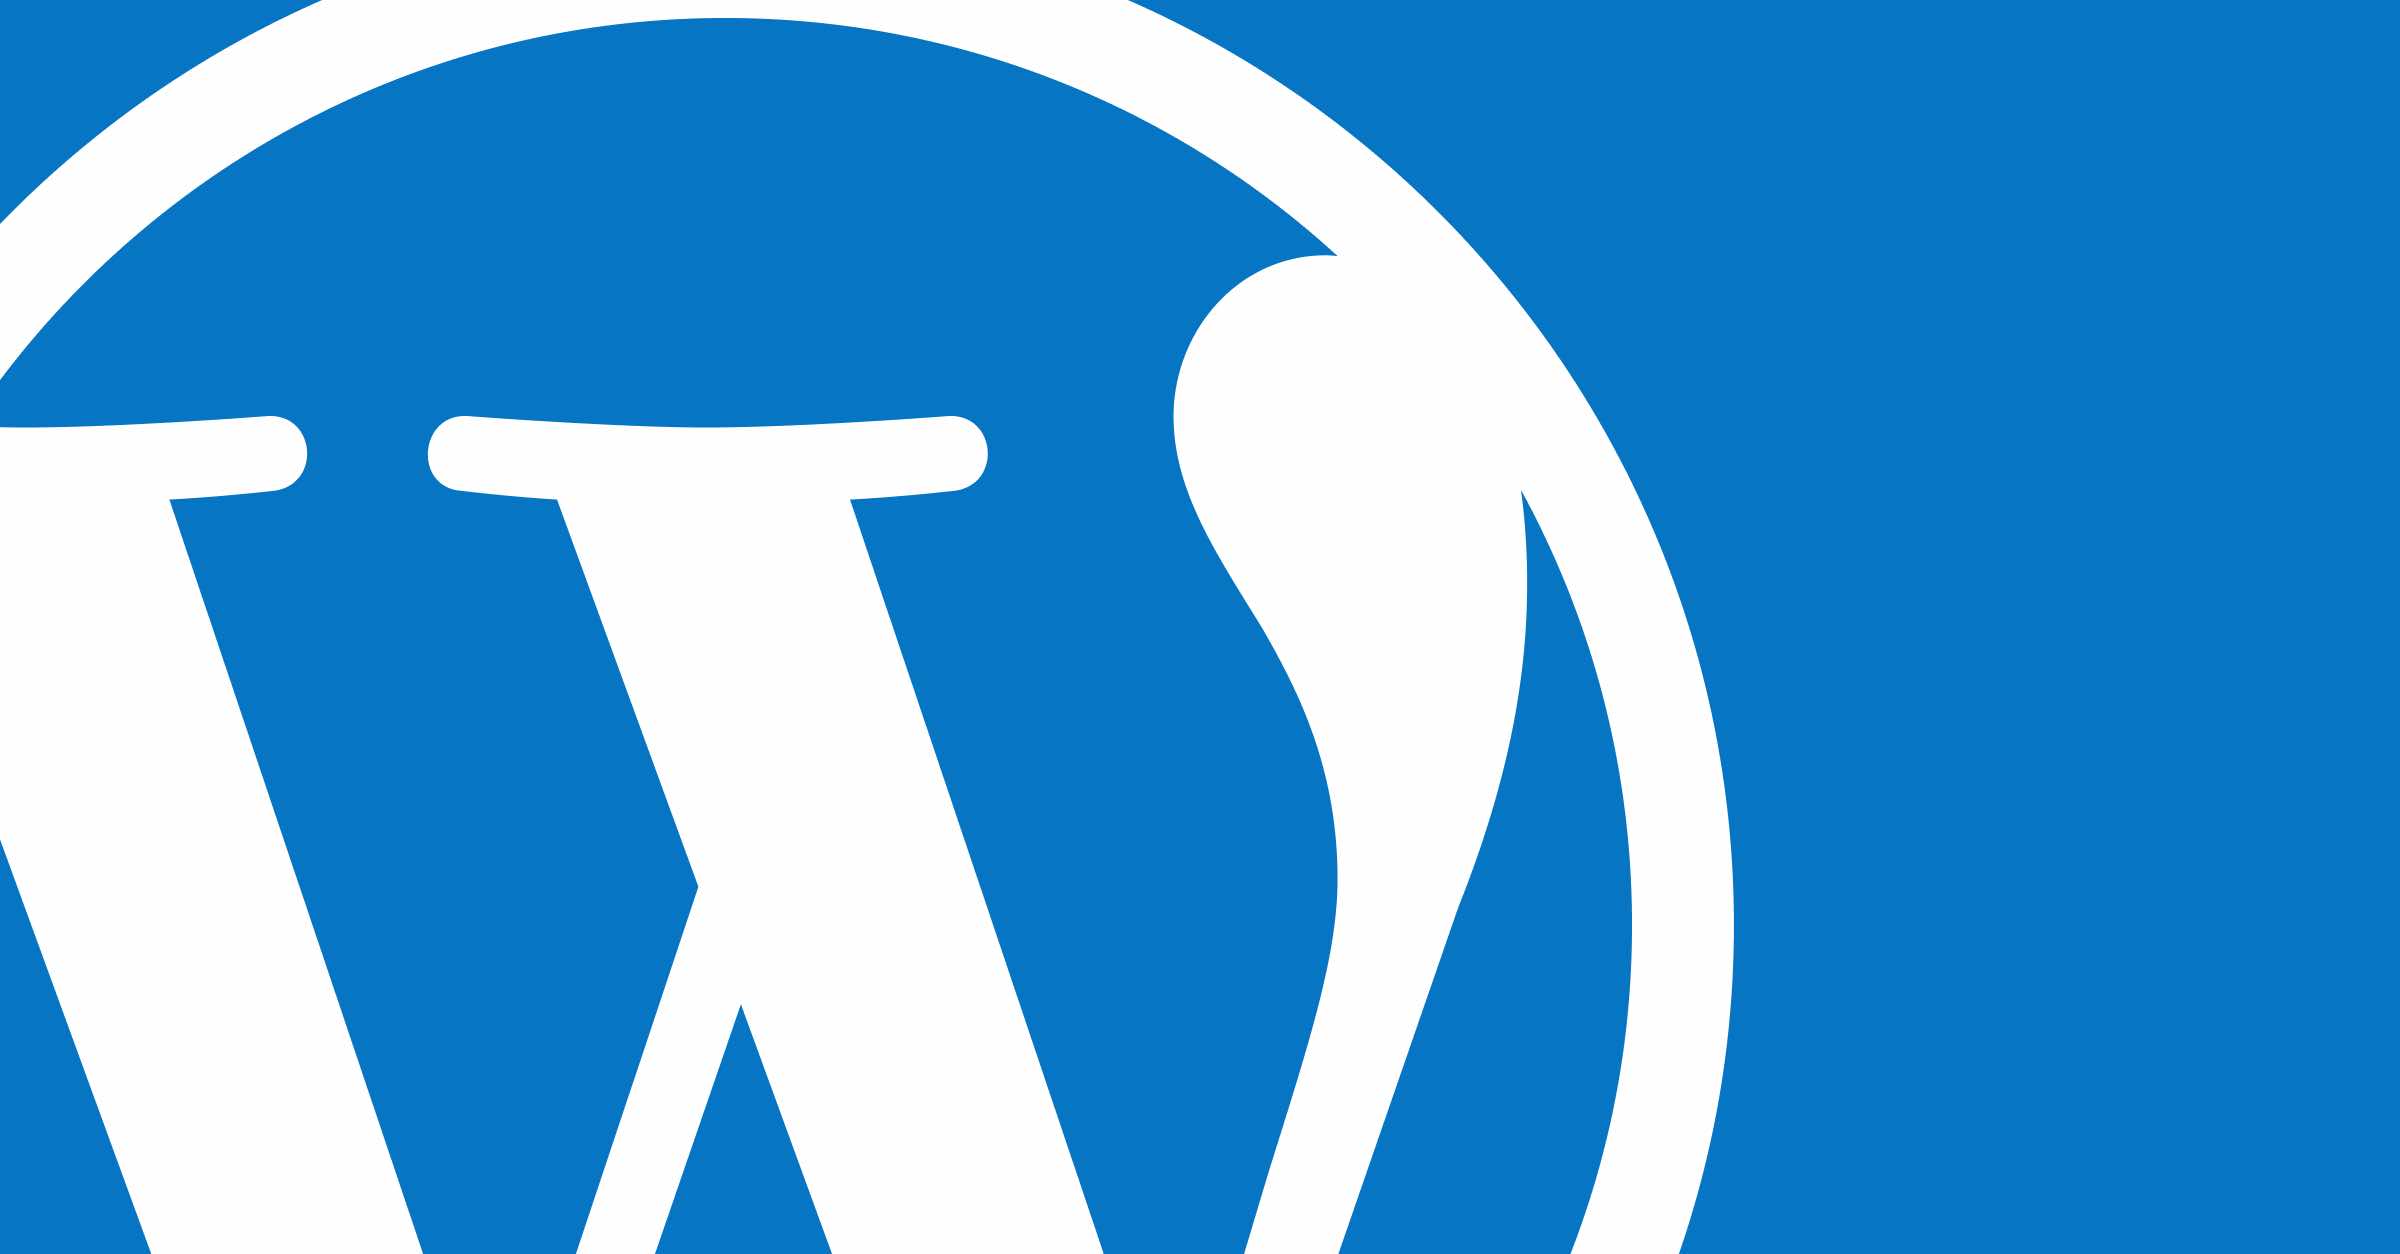 WordPress.com Logo